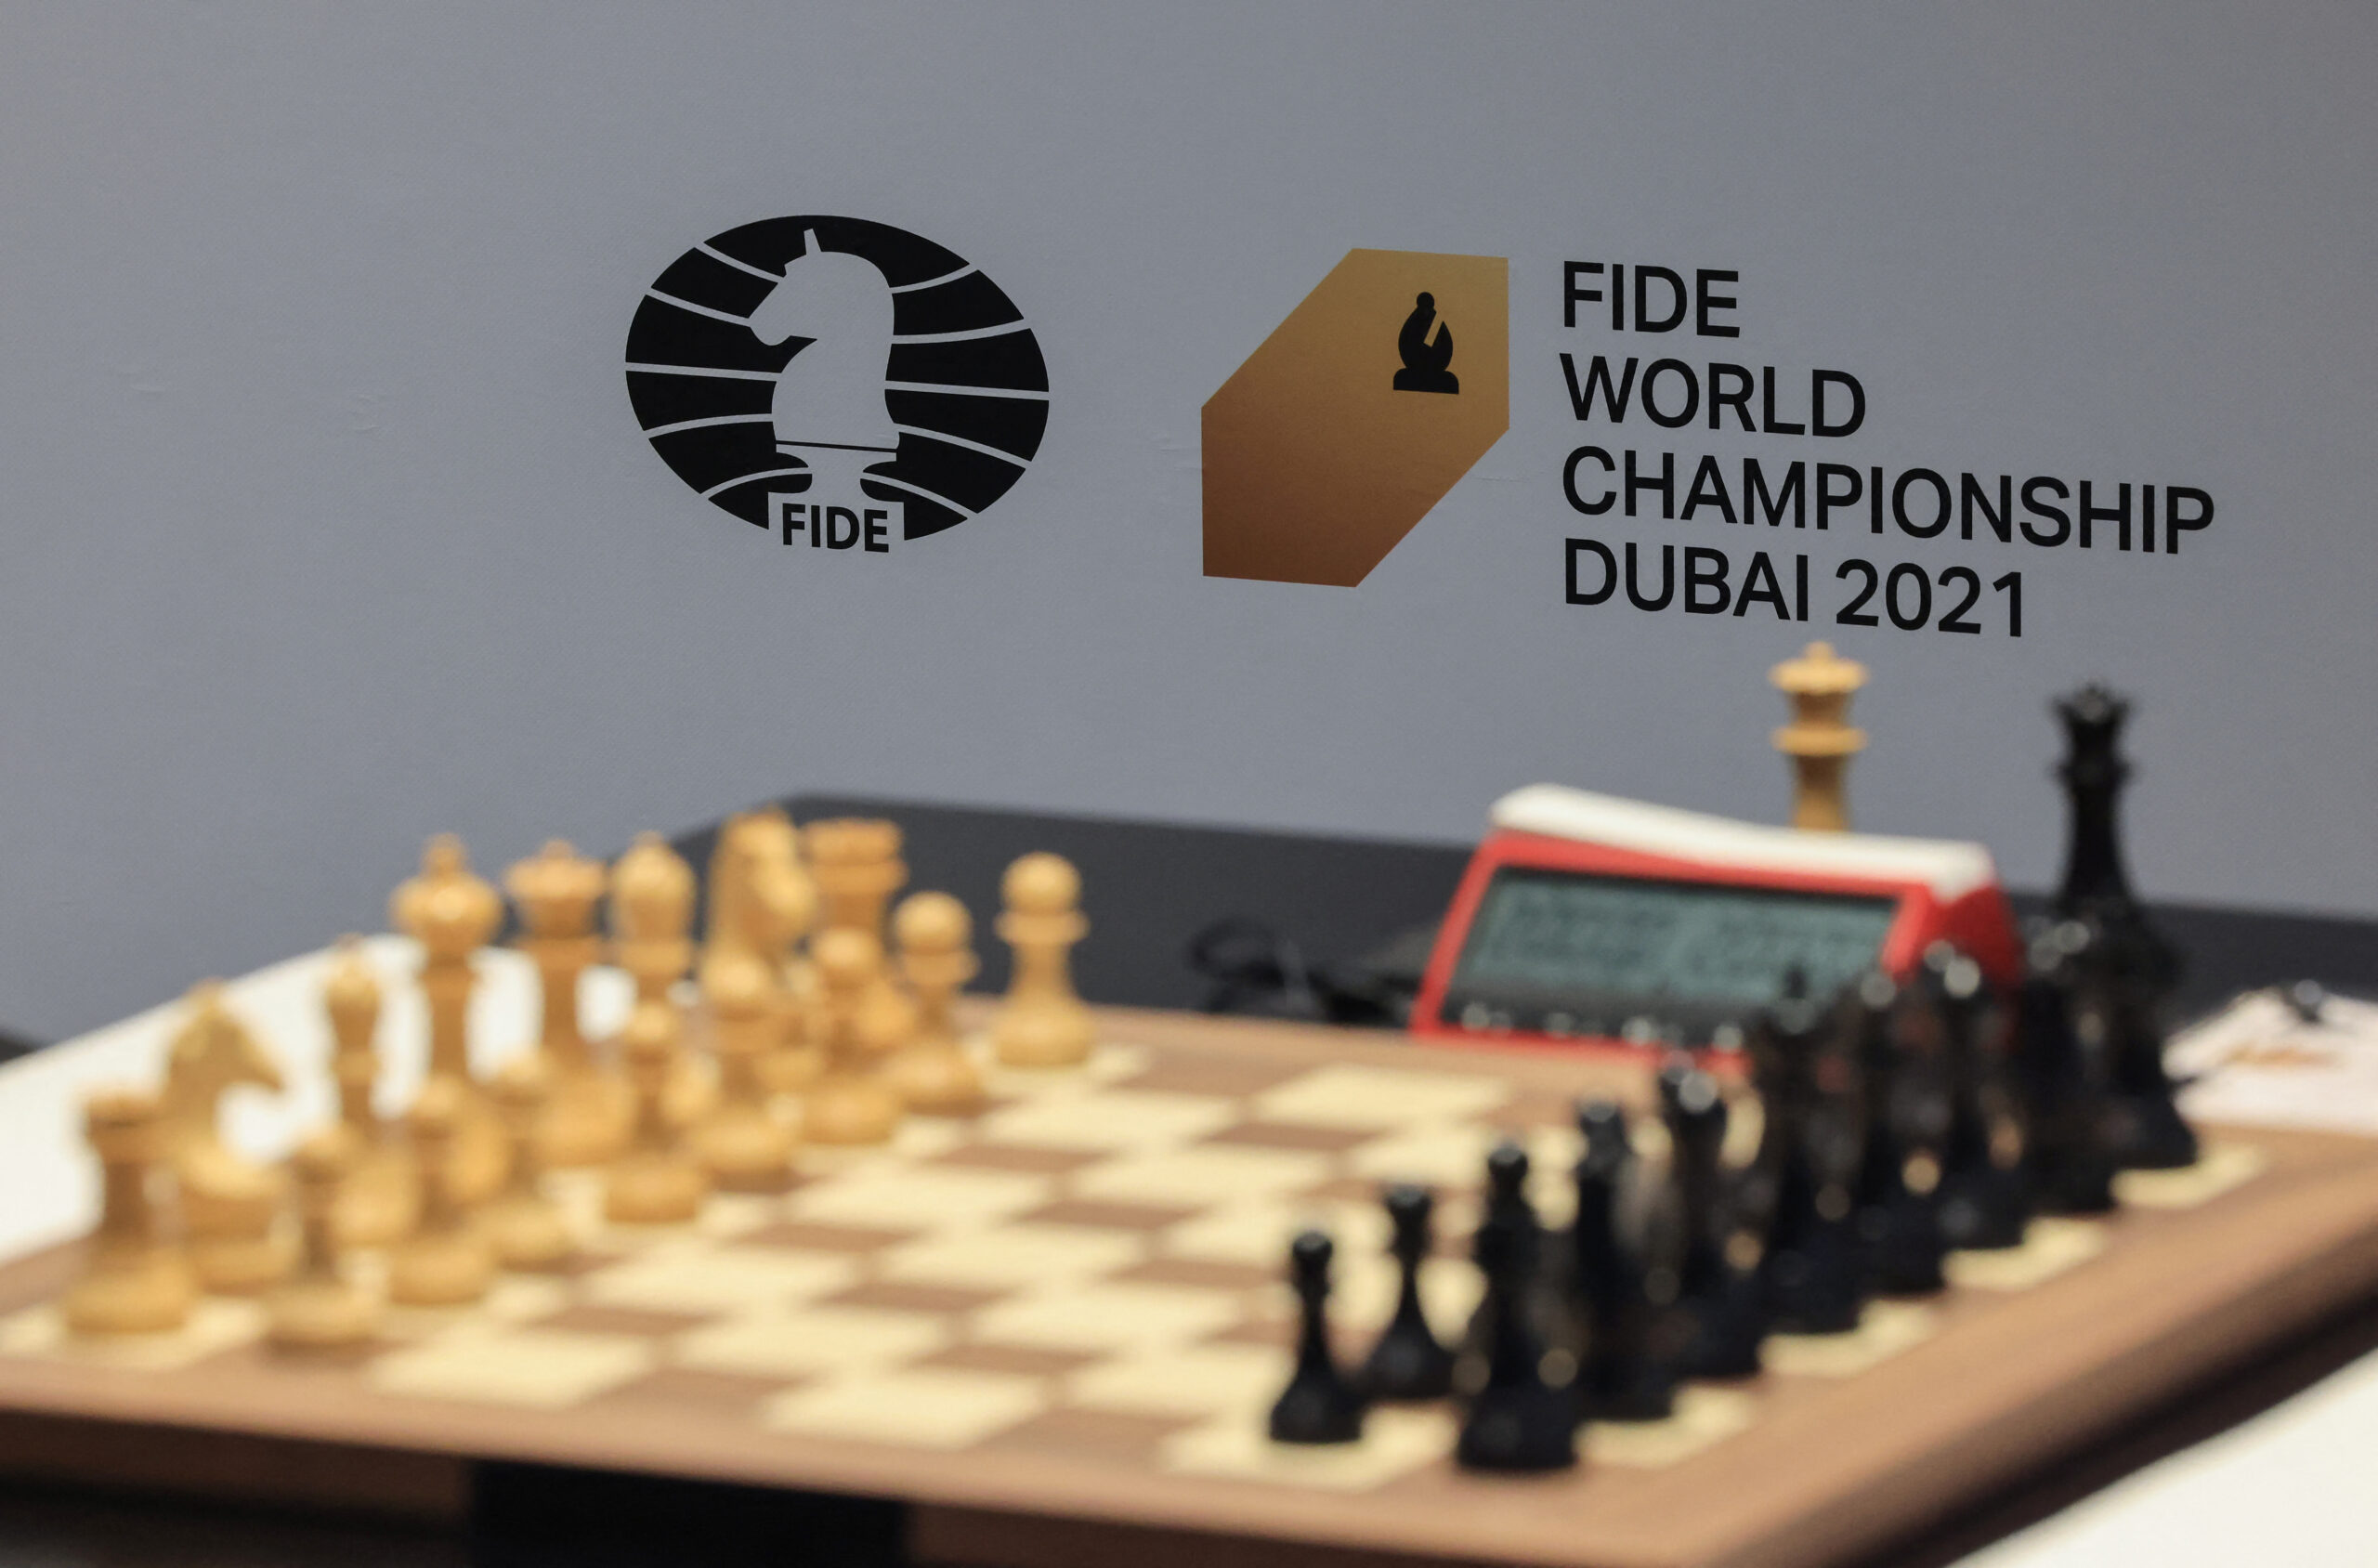 Grandmaster - FIDE - International Chess Federation